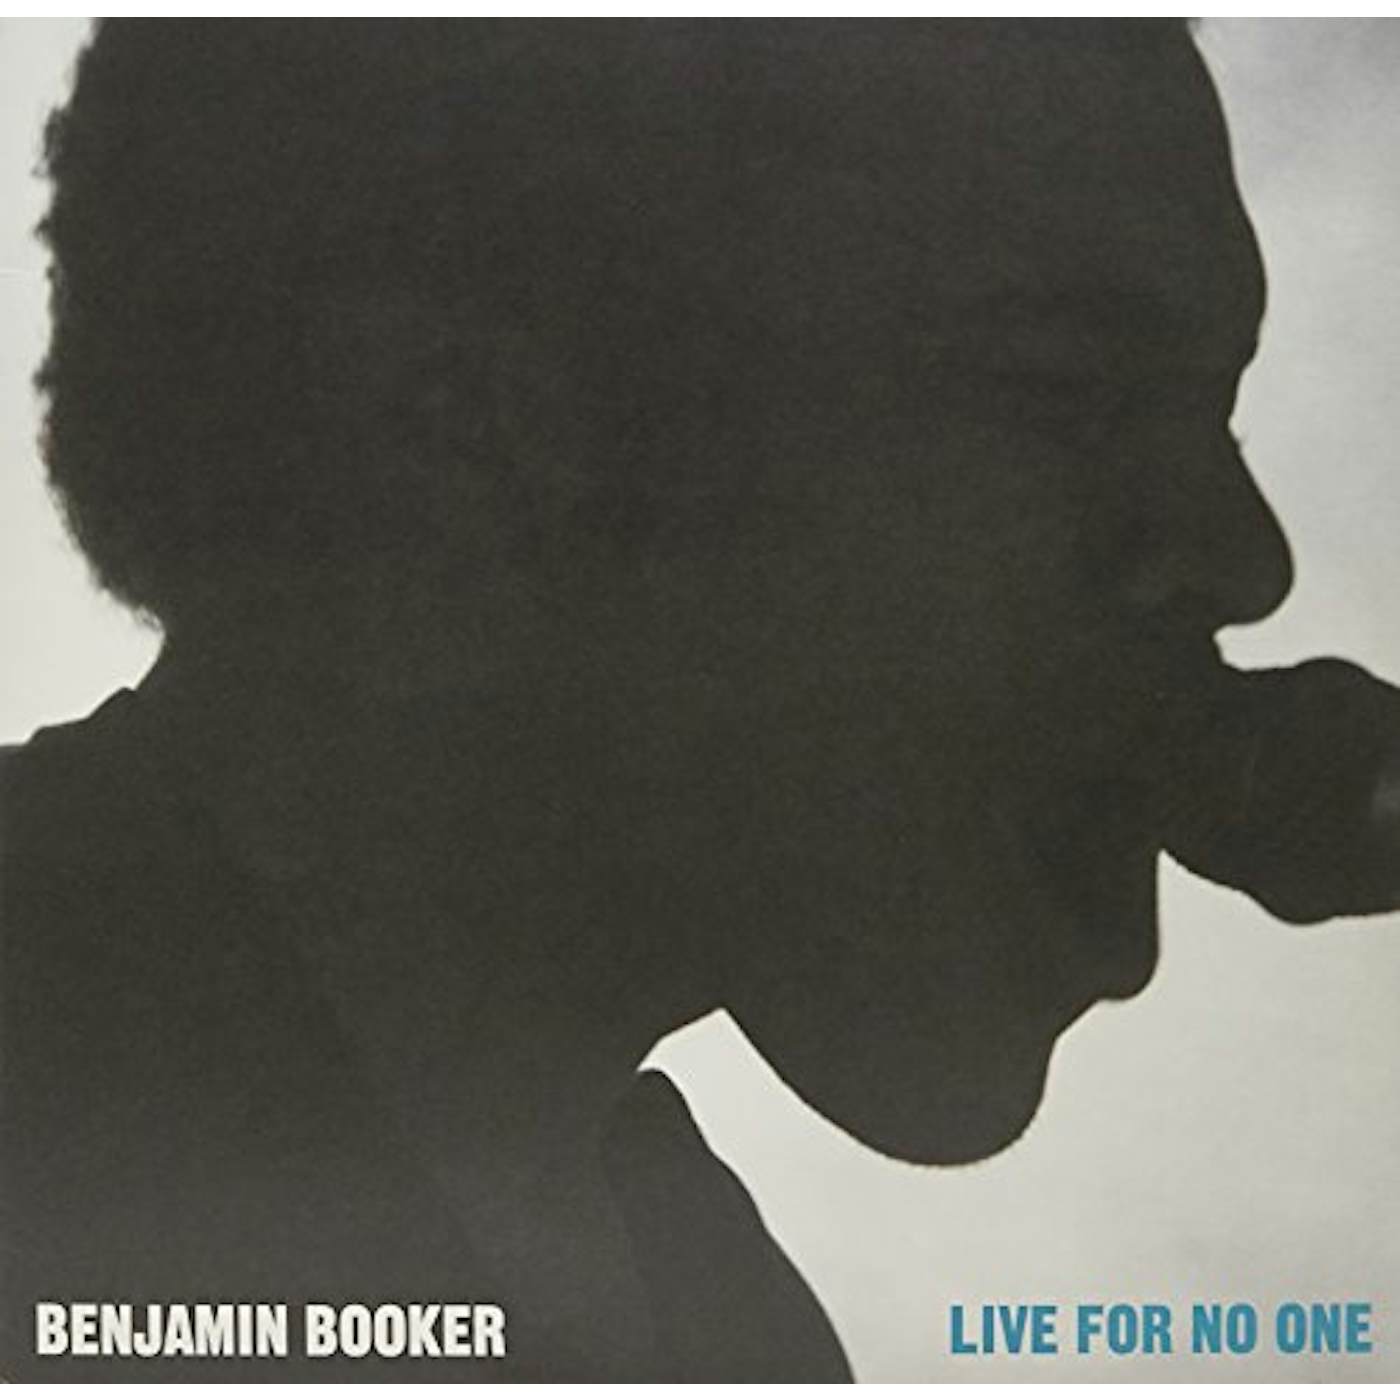 Benjamin Booker LIVE FOR NO ONE (LIVE COLUMBUS THEATER PROVIDENDE) Vinyl Record